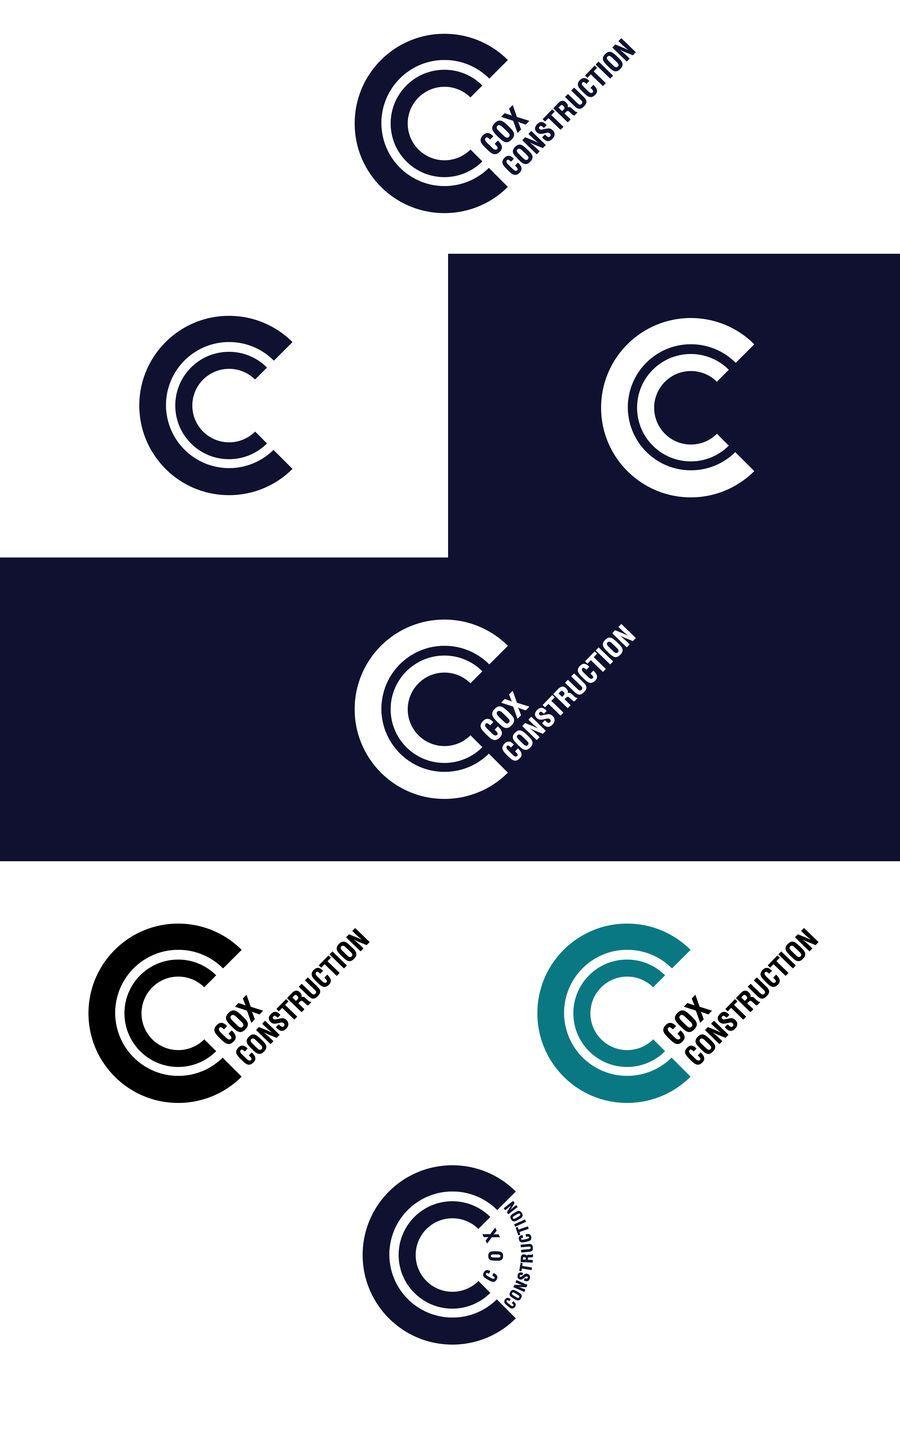 CC Company Logo - Entry by williamfarhat for CC logo for construction company